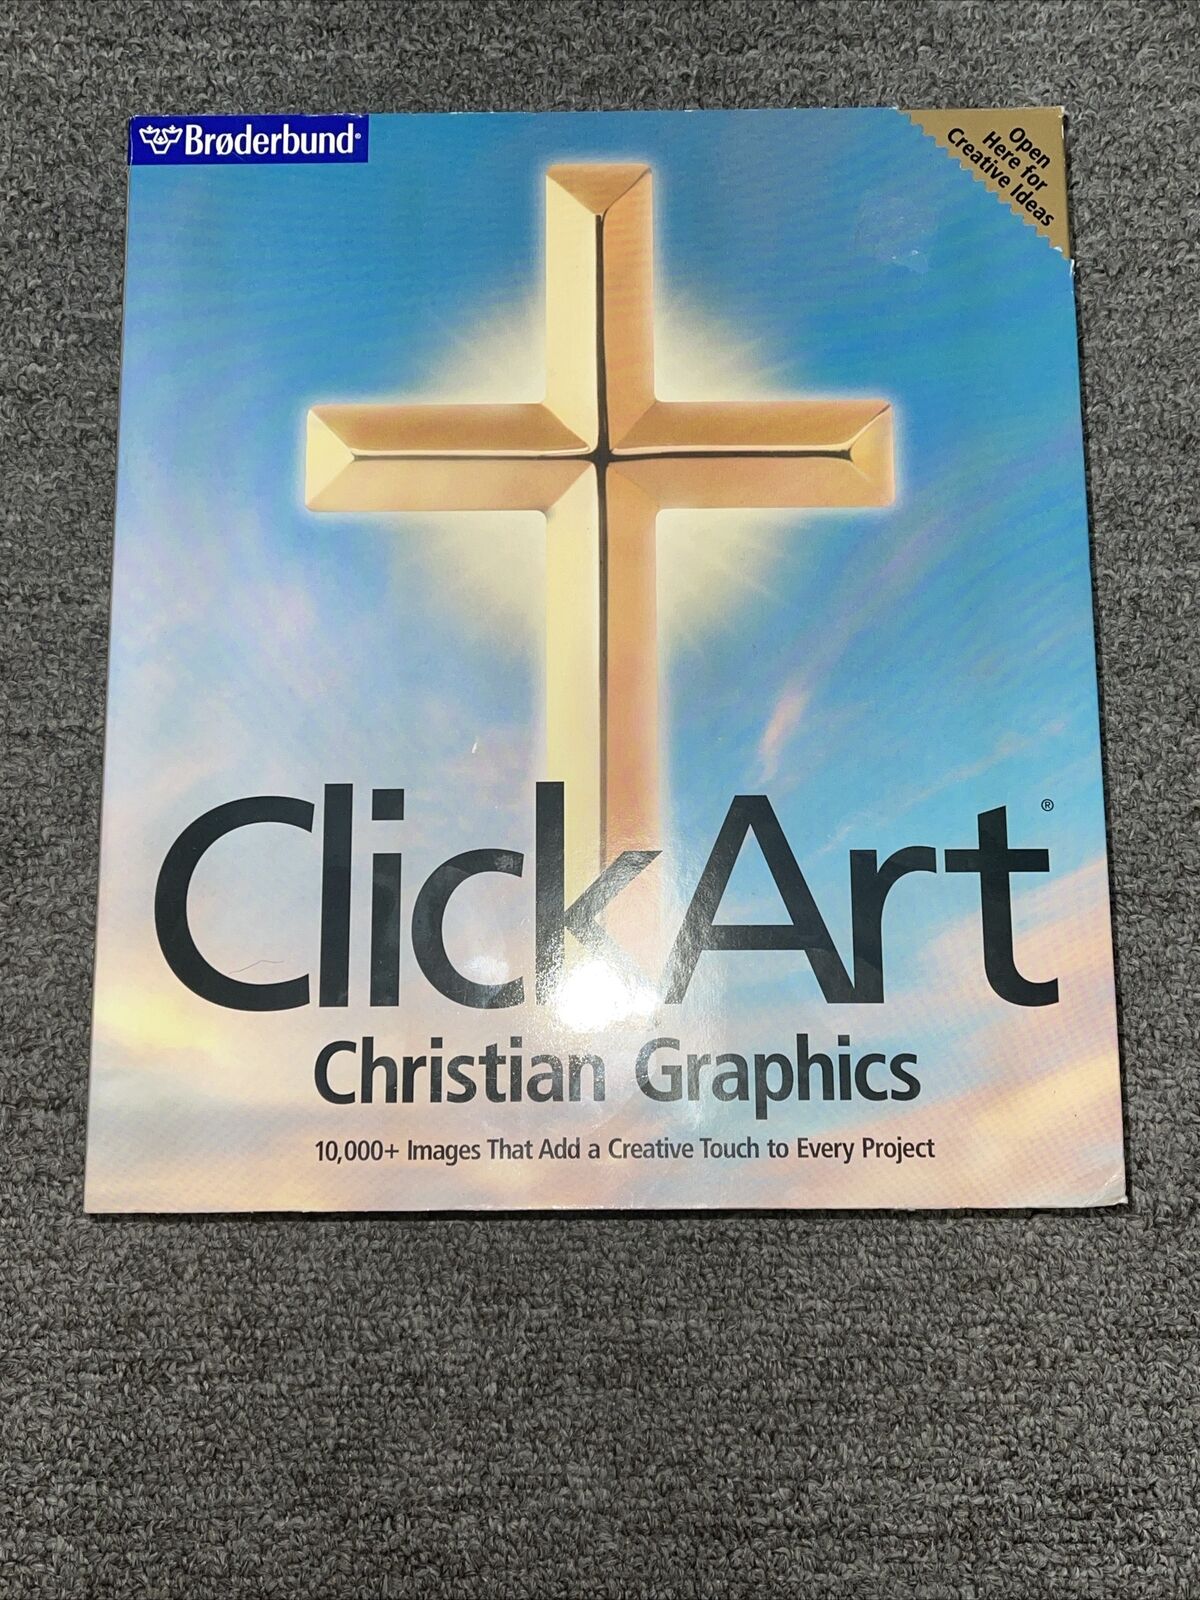 Broderbund ClickArt Christian Graphics Software For Windows 95 -Used, Very Good